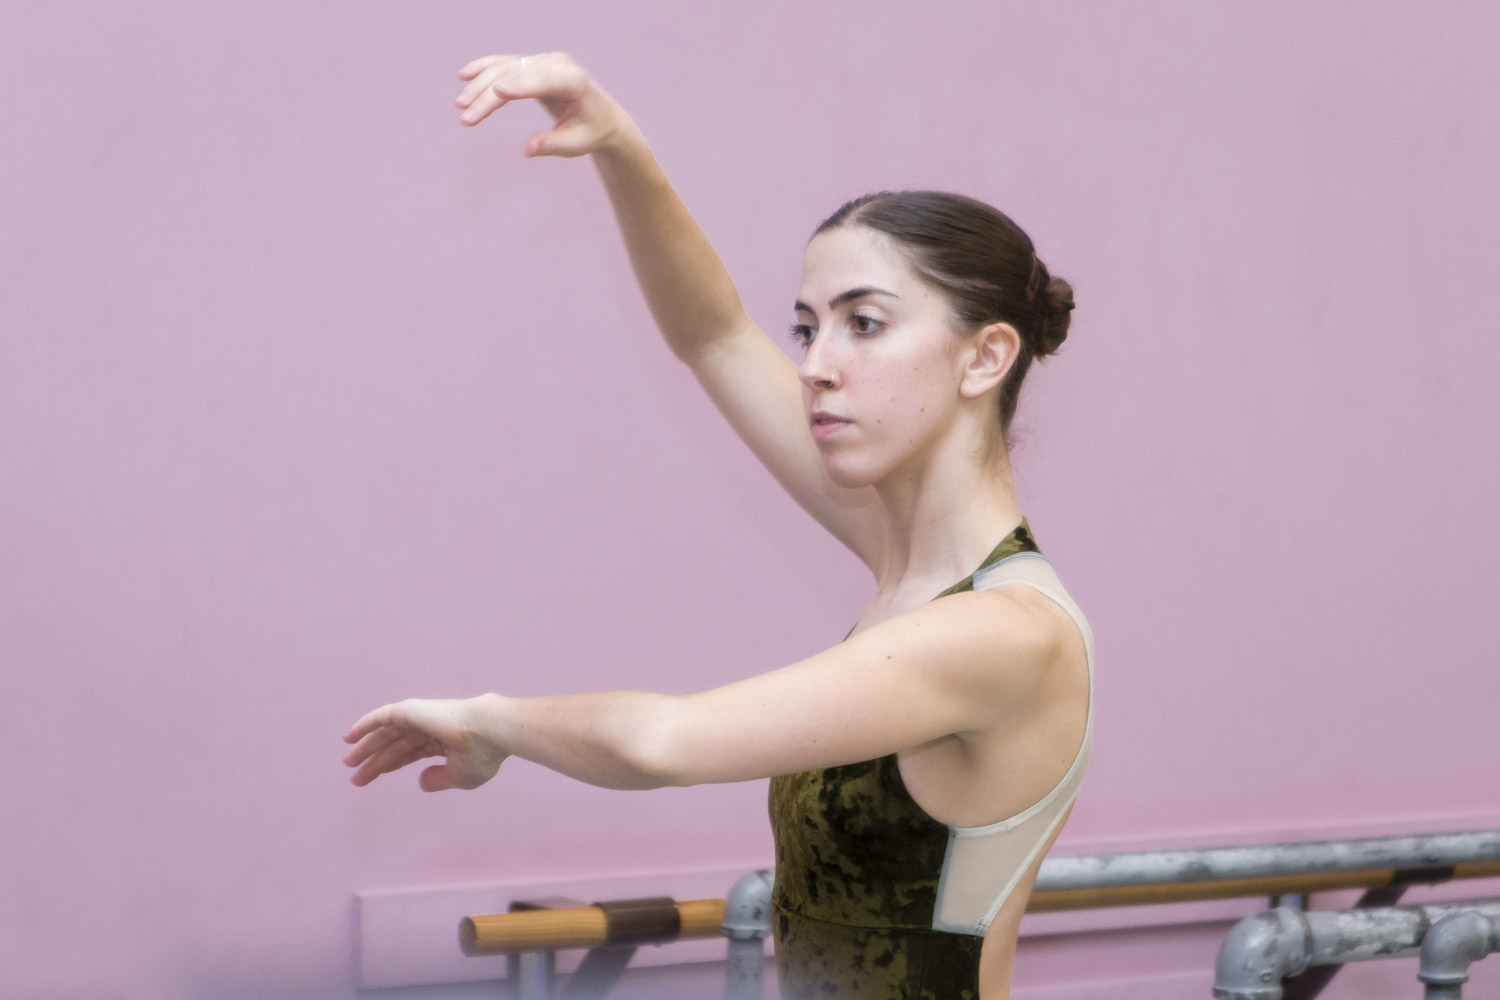  Bowen McCauley Dance Co. rehearsal at MD Youth Ballet, November 29, 2016. Photo: John St Hilaire | Lightenough.com 